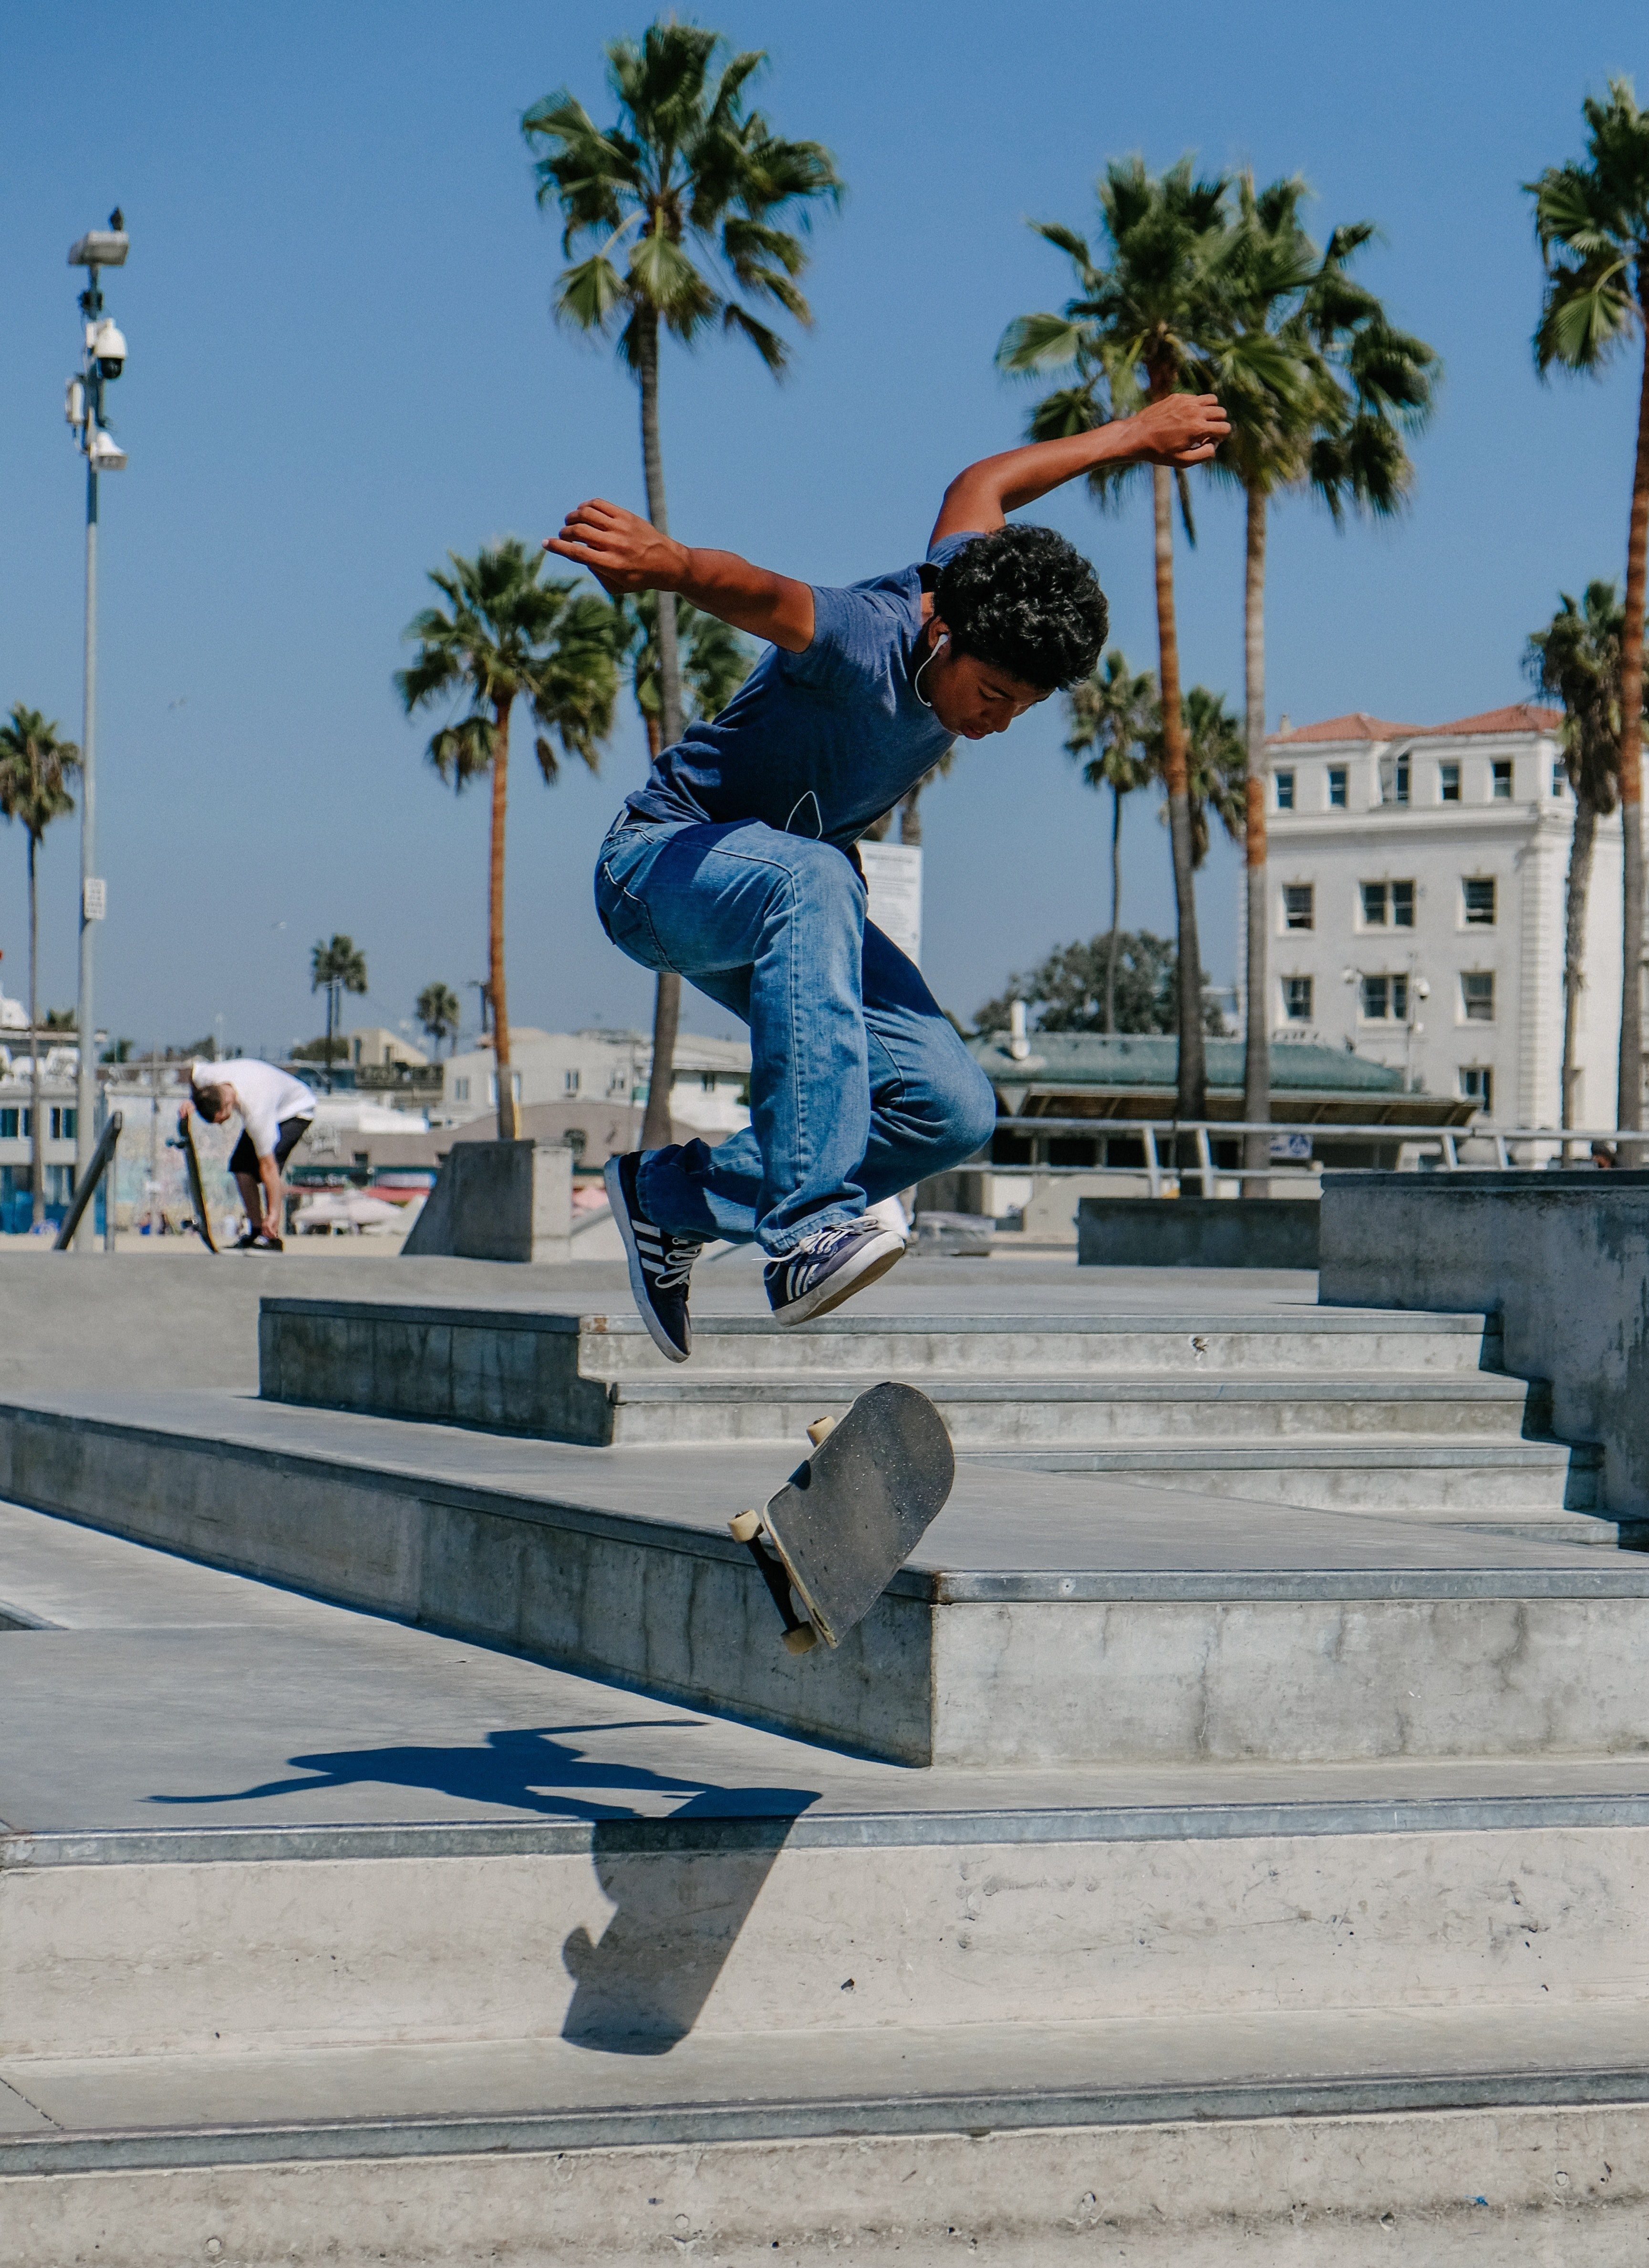 Wallpaper / skateboard skate park kick flip and palm tree HD 4k wallpaper free download